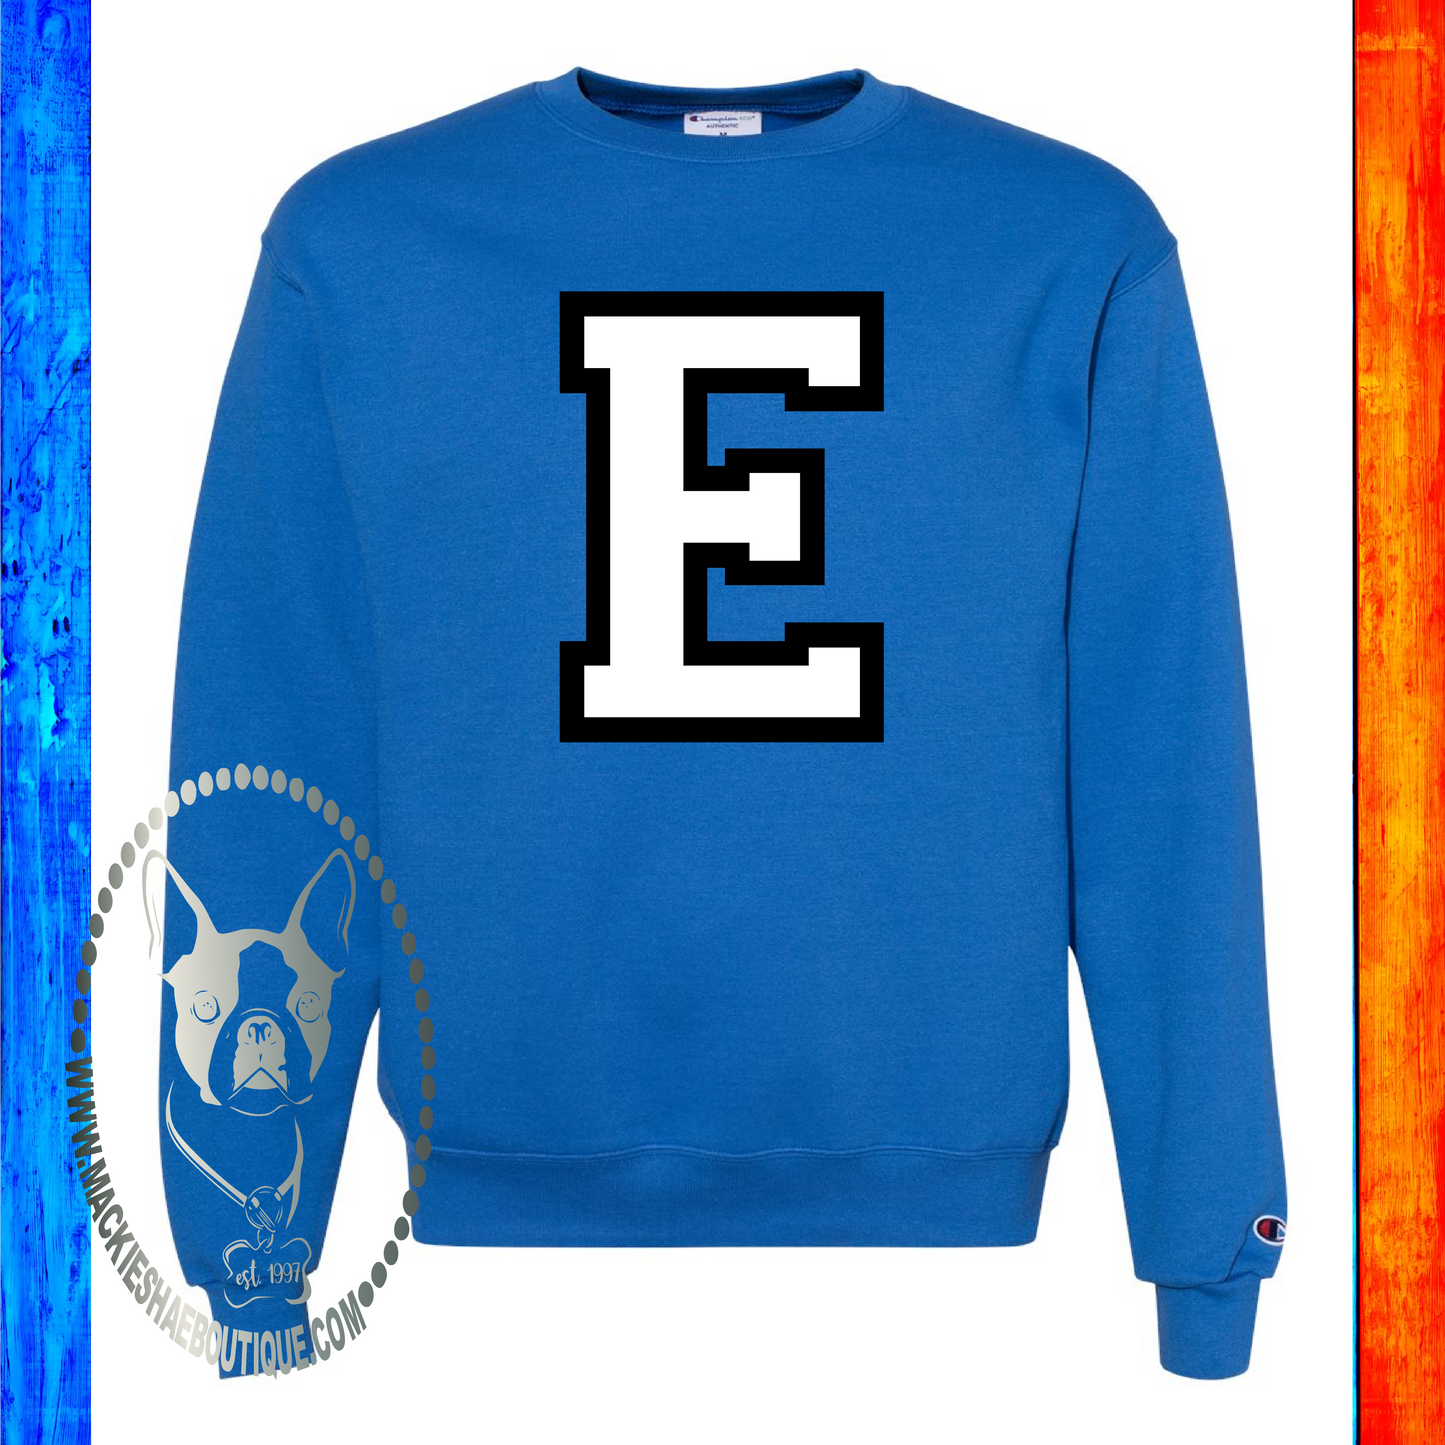 E for Ness City Eagles Custom Shirt, Champion Sweatshirt